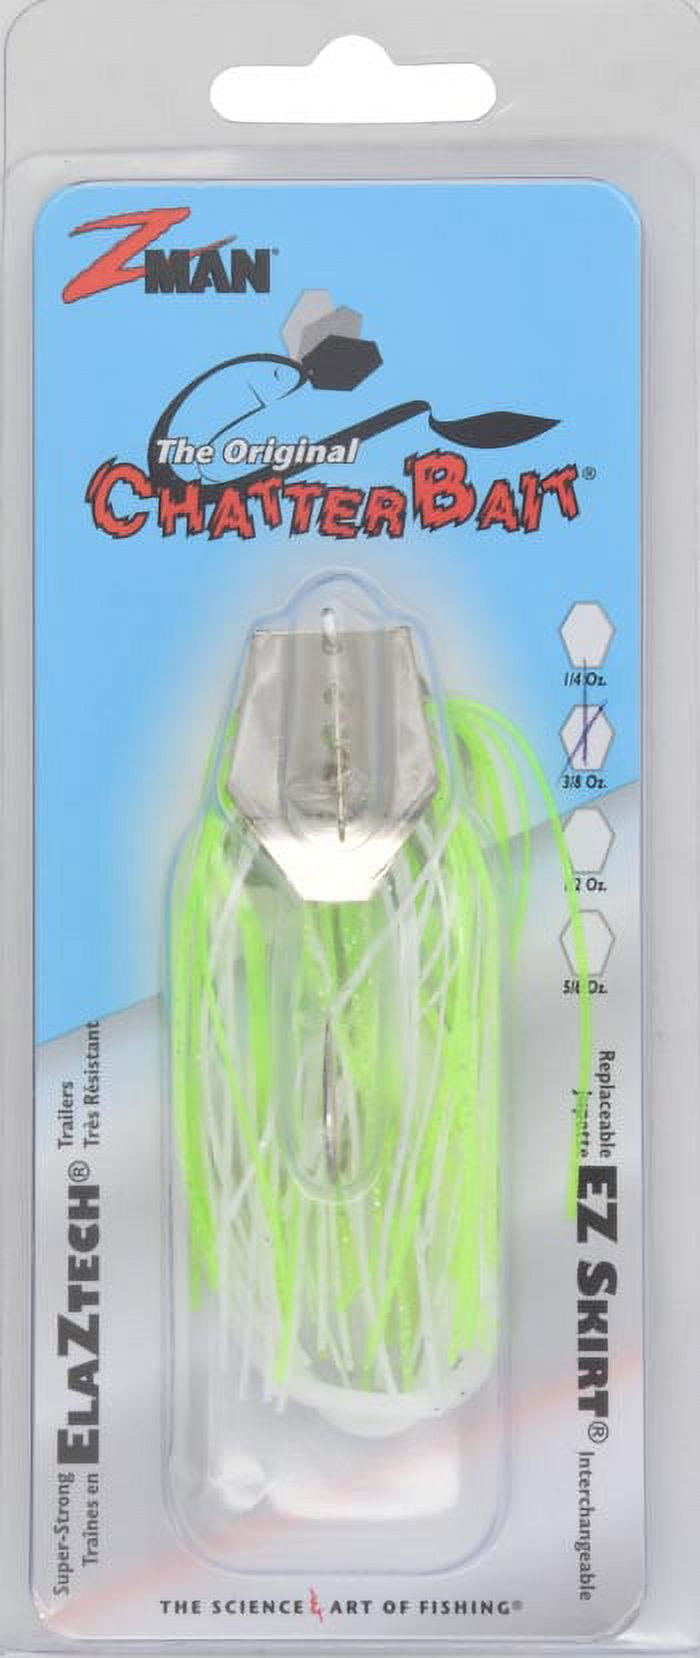 Z-Man Chatter Bait Original Lures, Chartreuse White, 3/8 oz